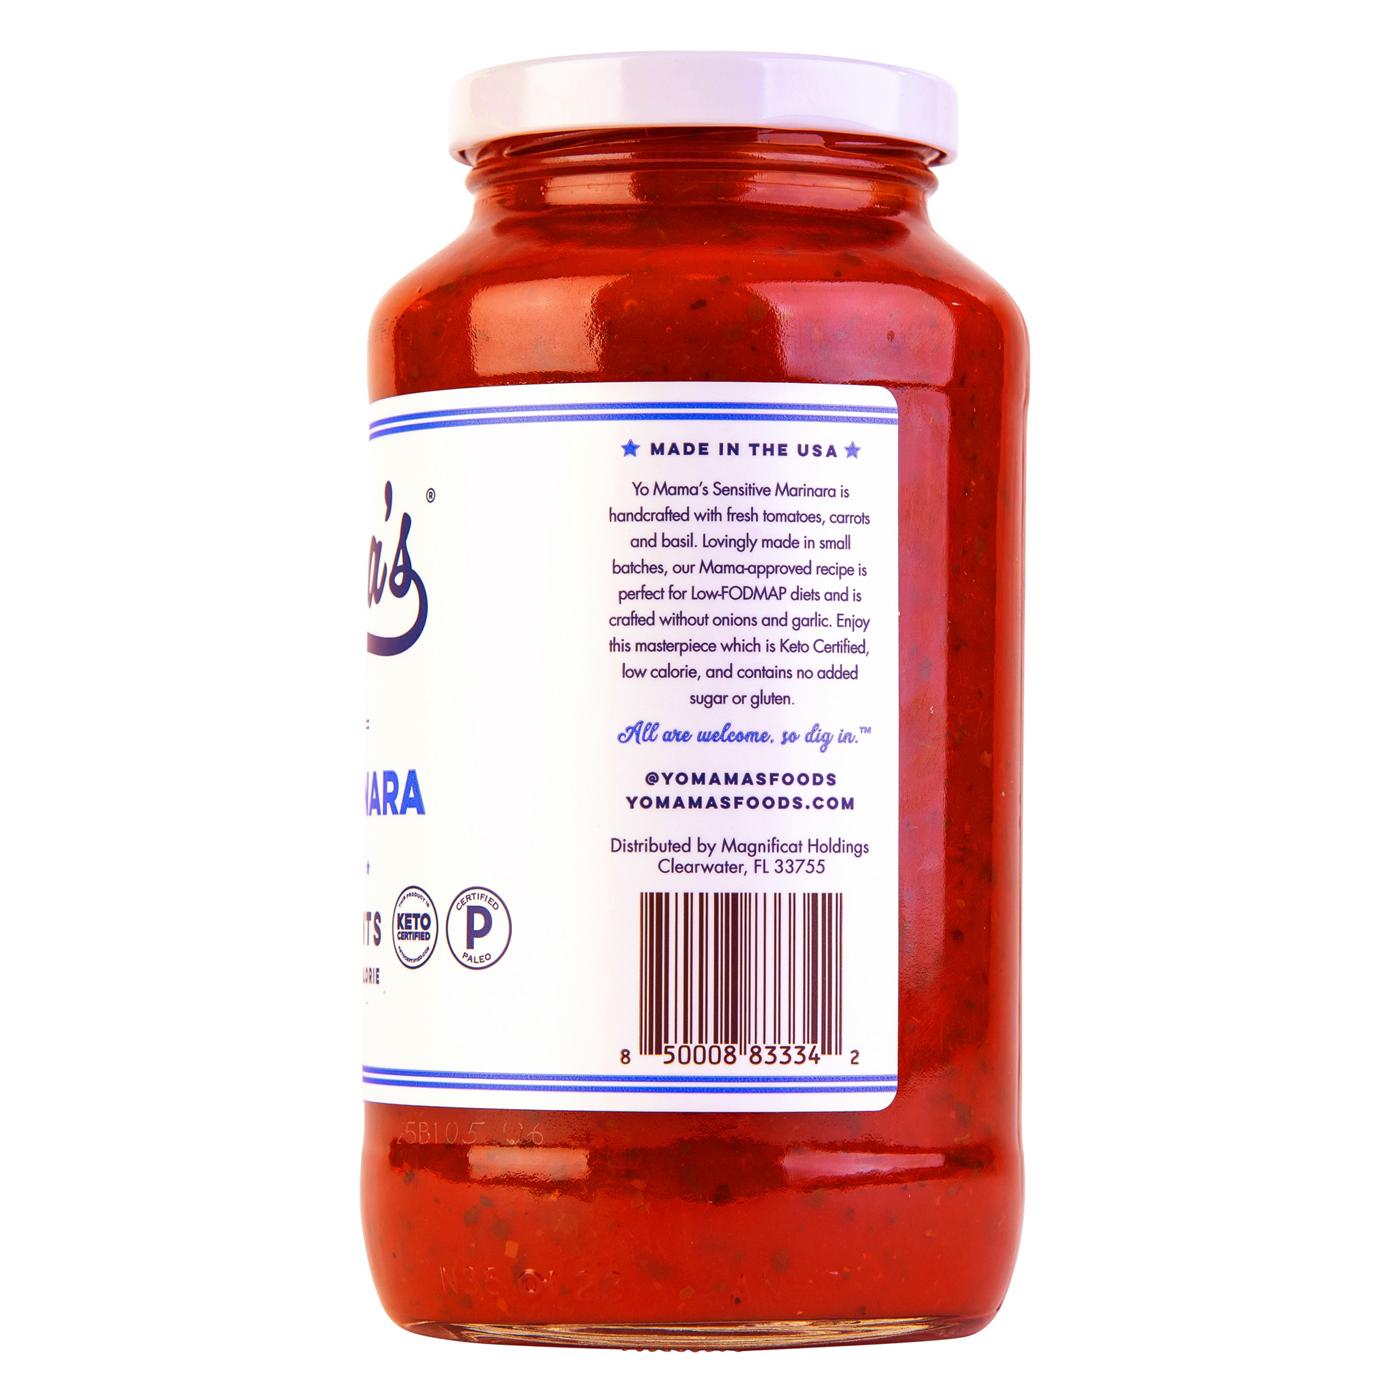 Yo Mama's Sensitive Marinara Tomato Sauce; image 3 of 3